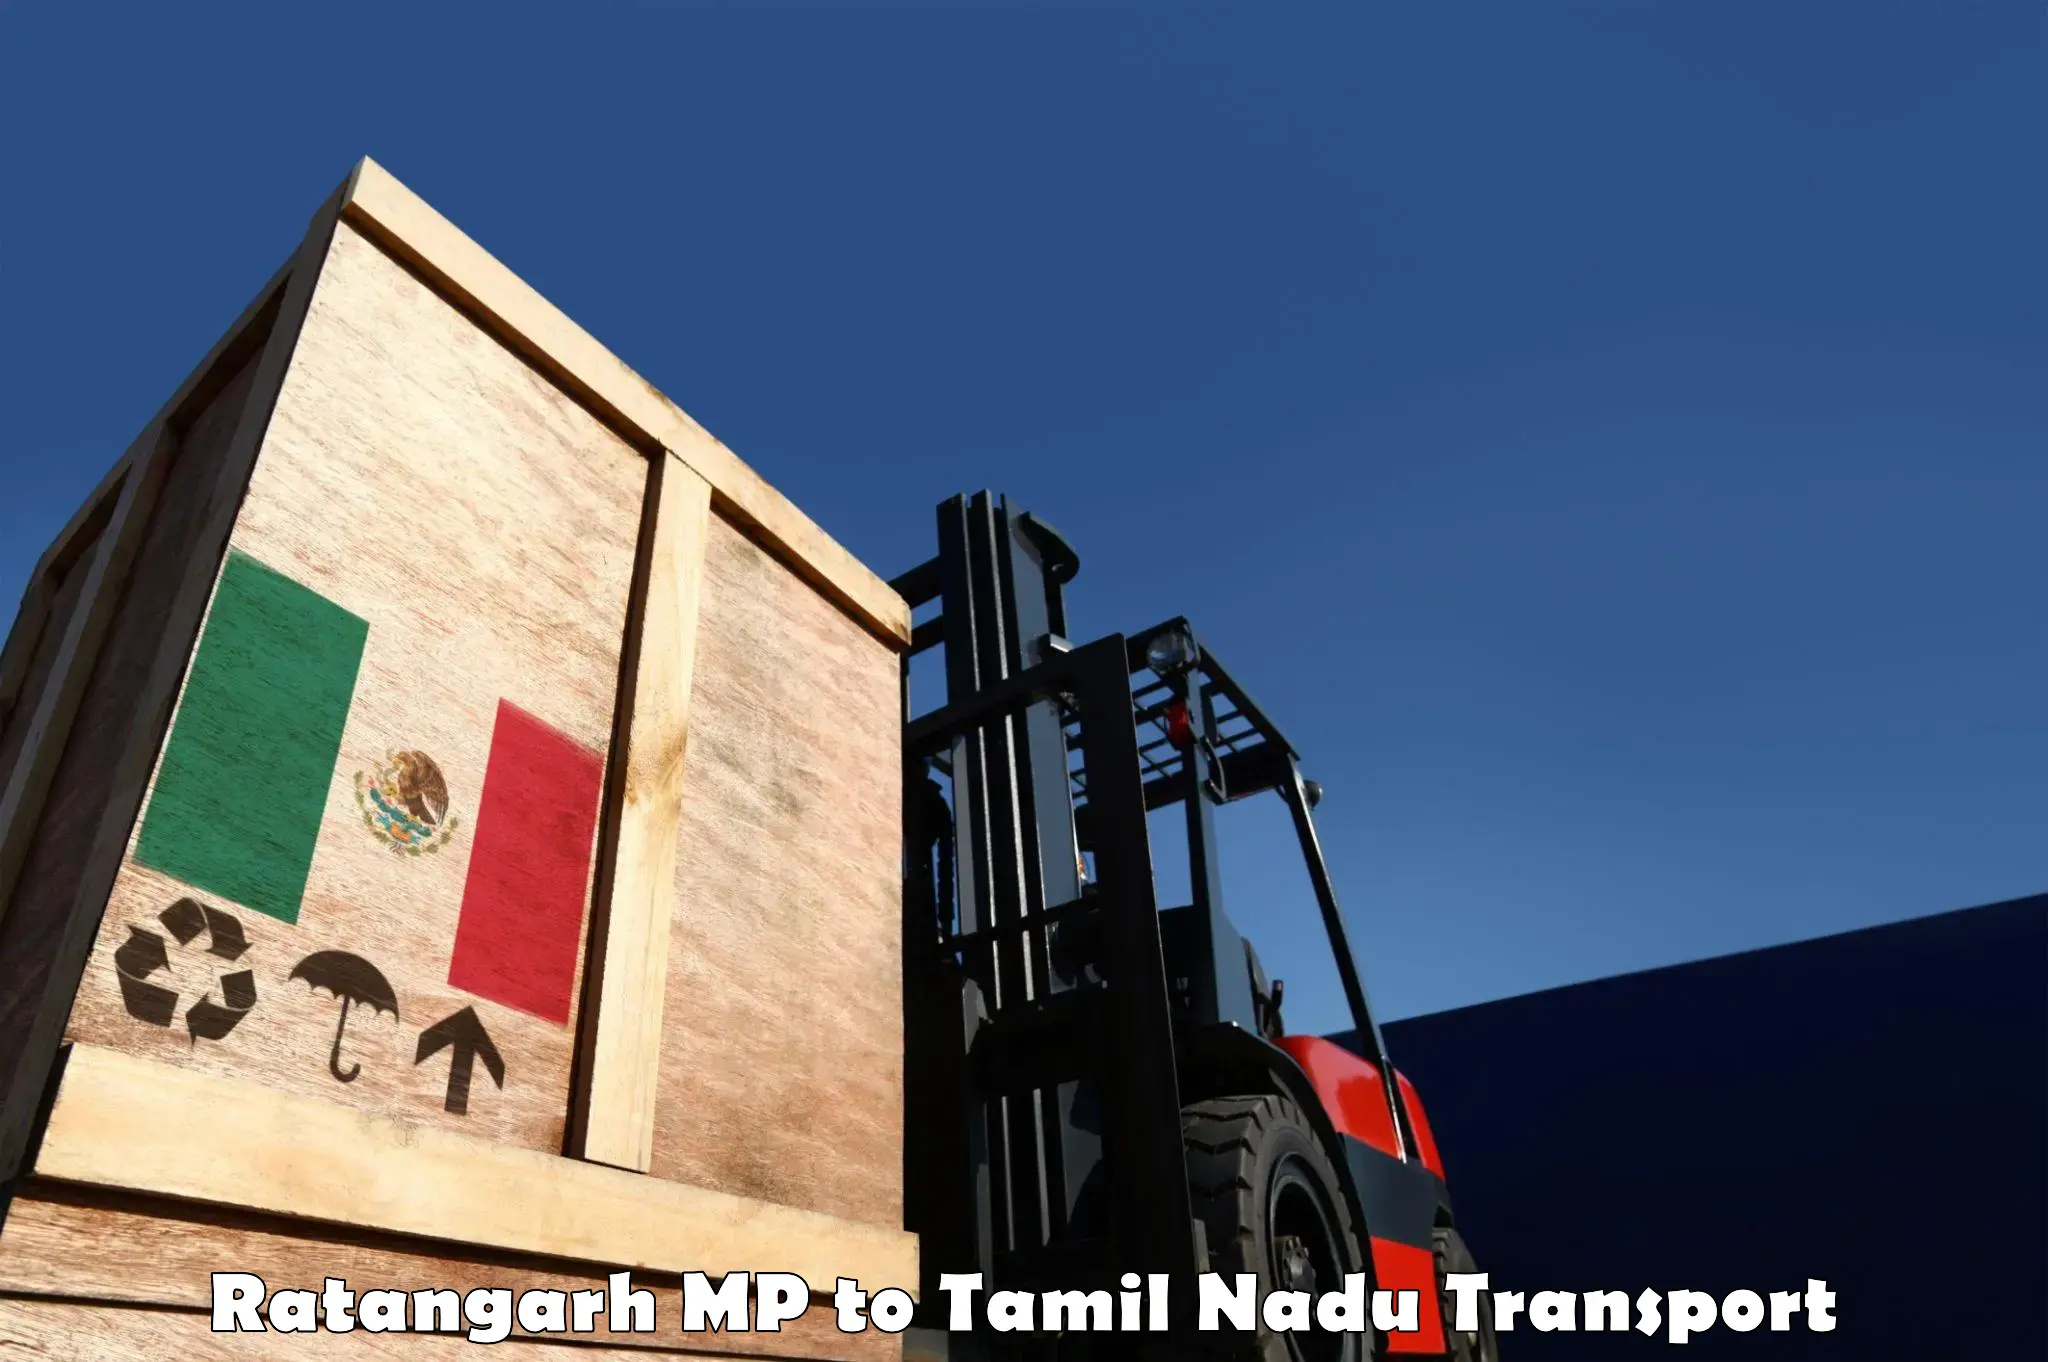 Online transport service Ratangarh MP to Tamil Nadu